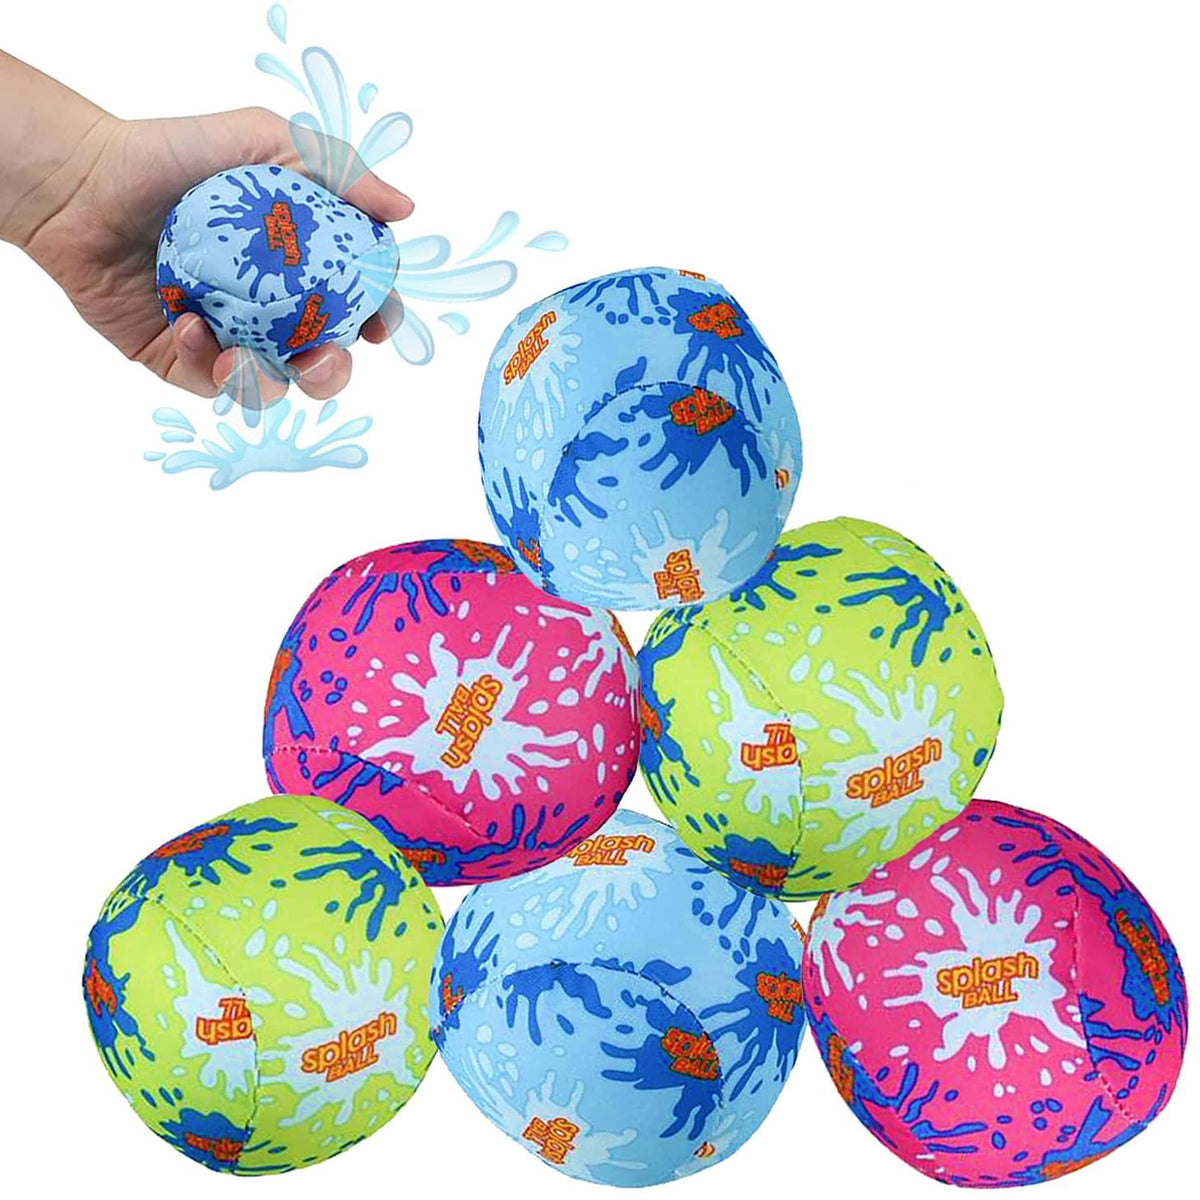 Splash Balls Toys In Bulk- Assorted